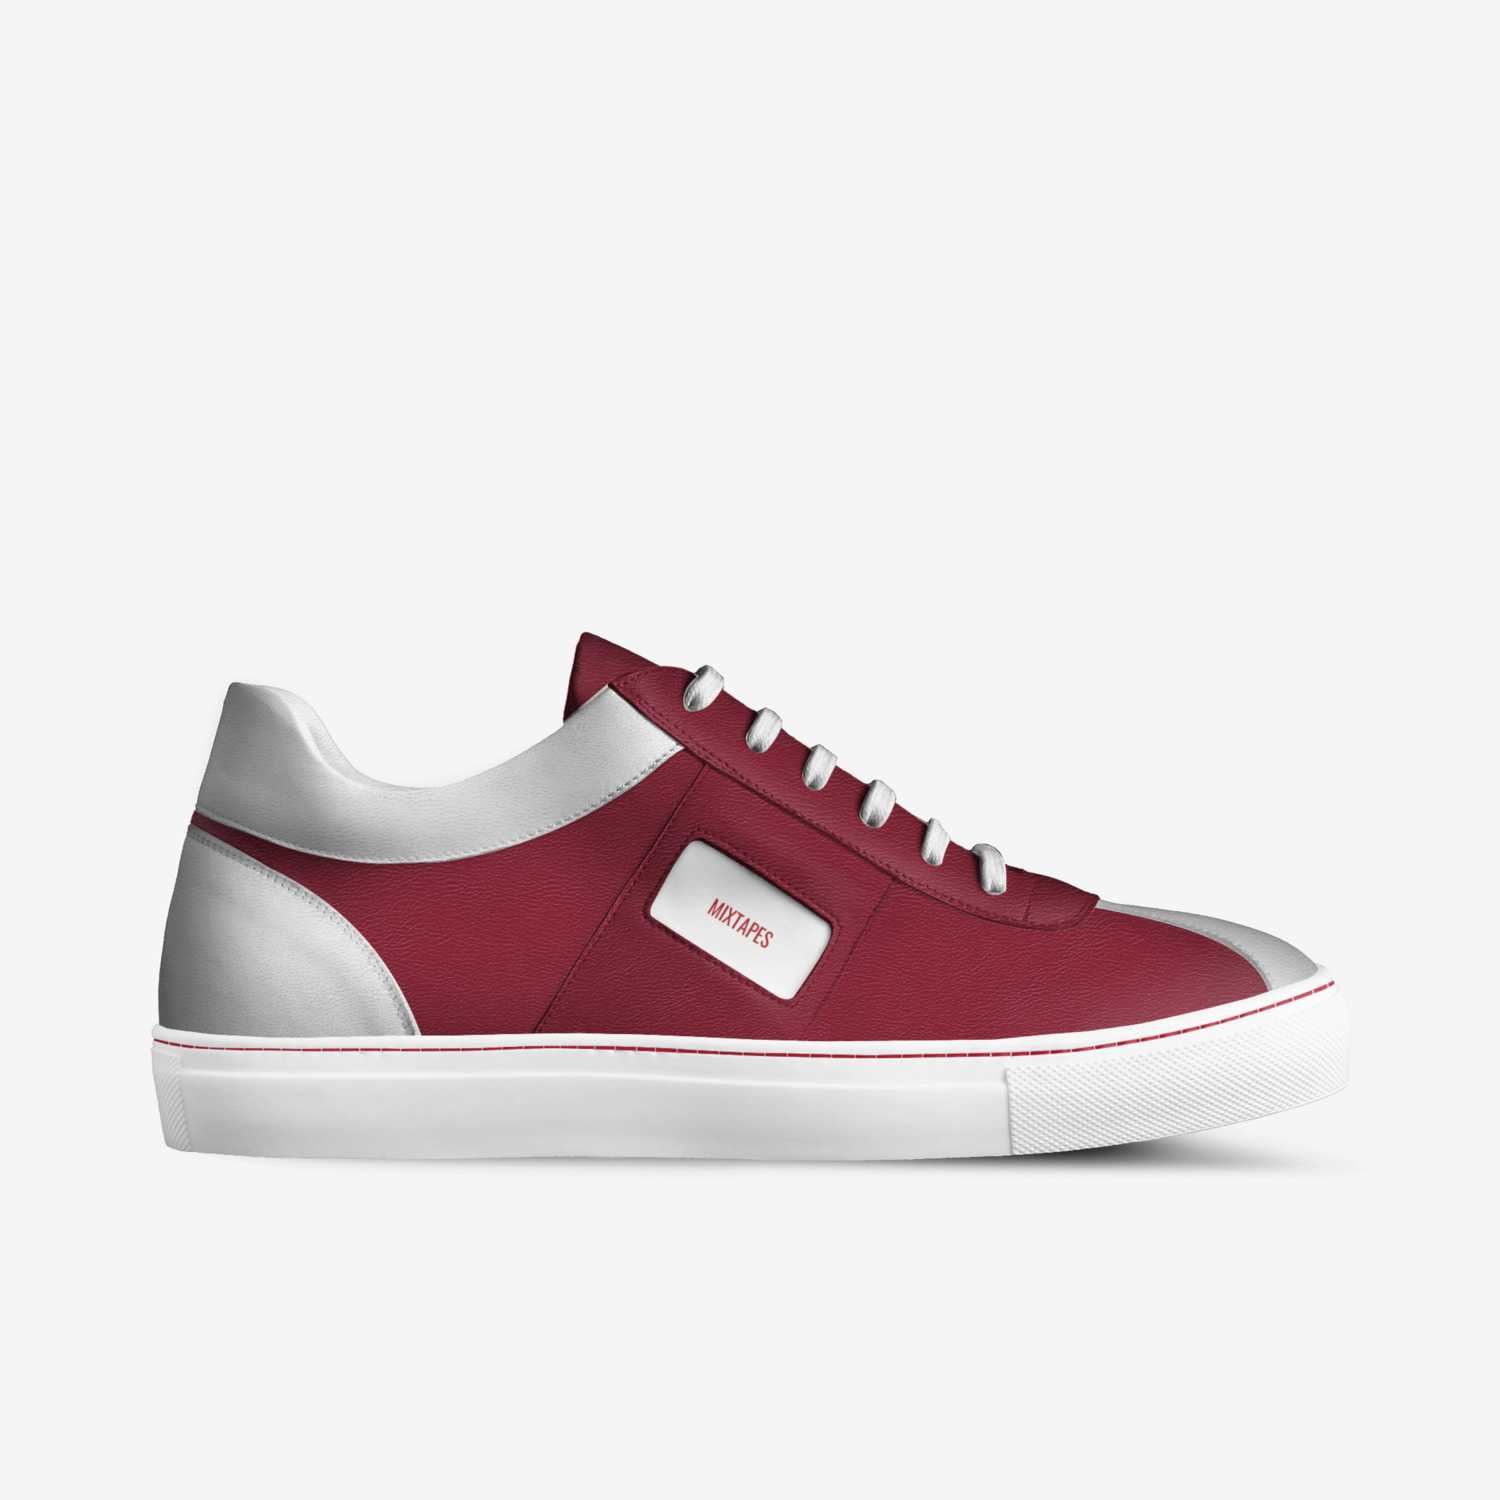 Pumped Up Kicks | A Custom Shoe concept by Savannah Ferreira